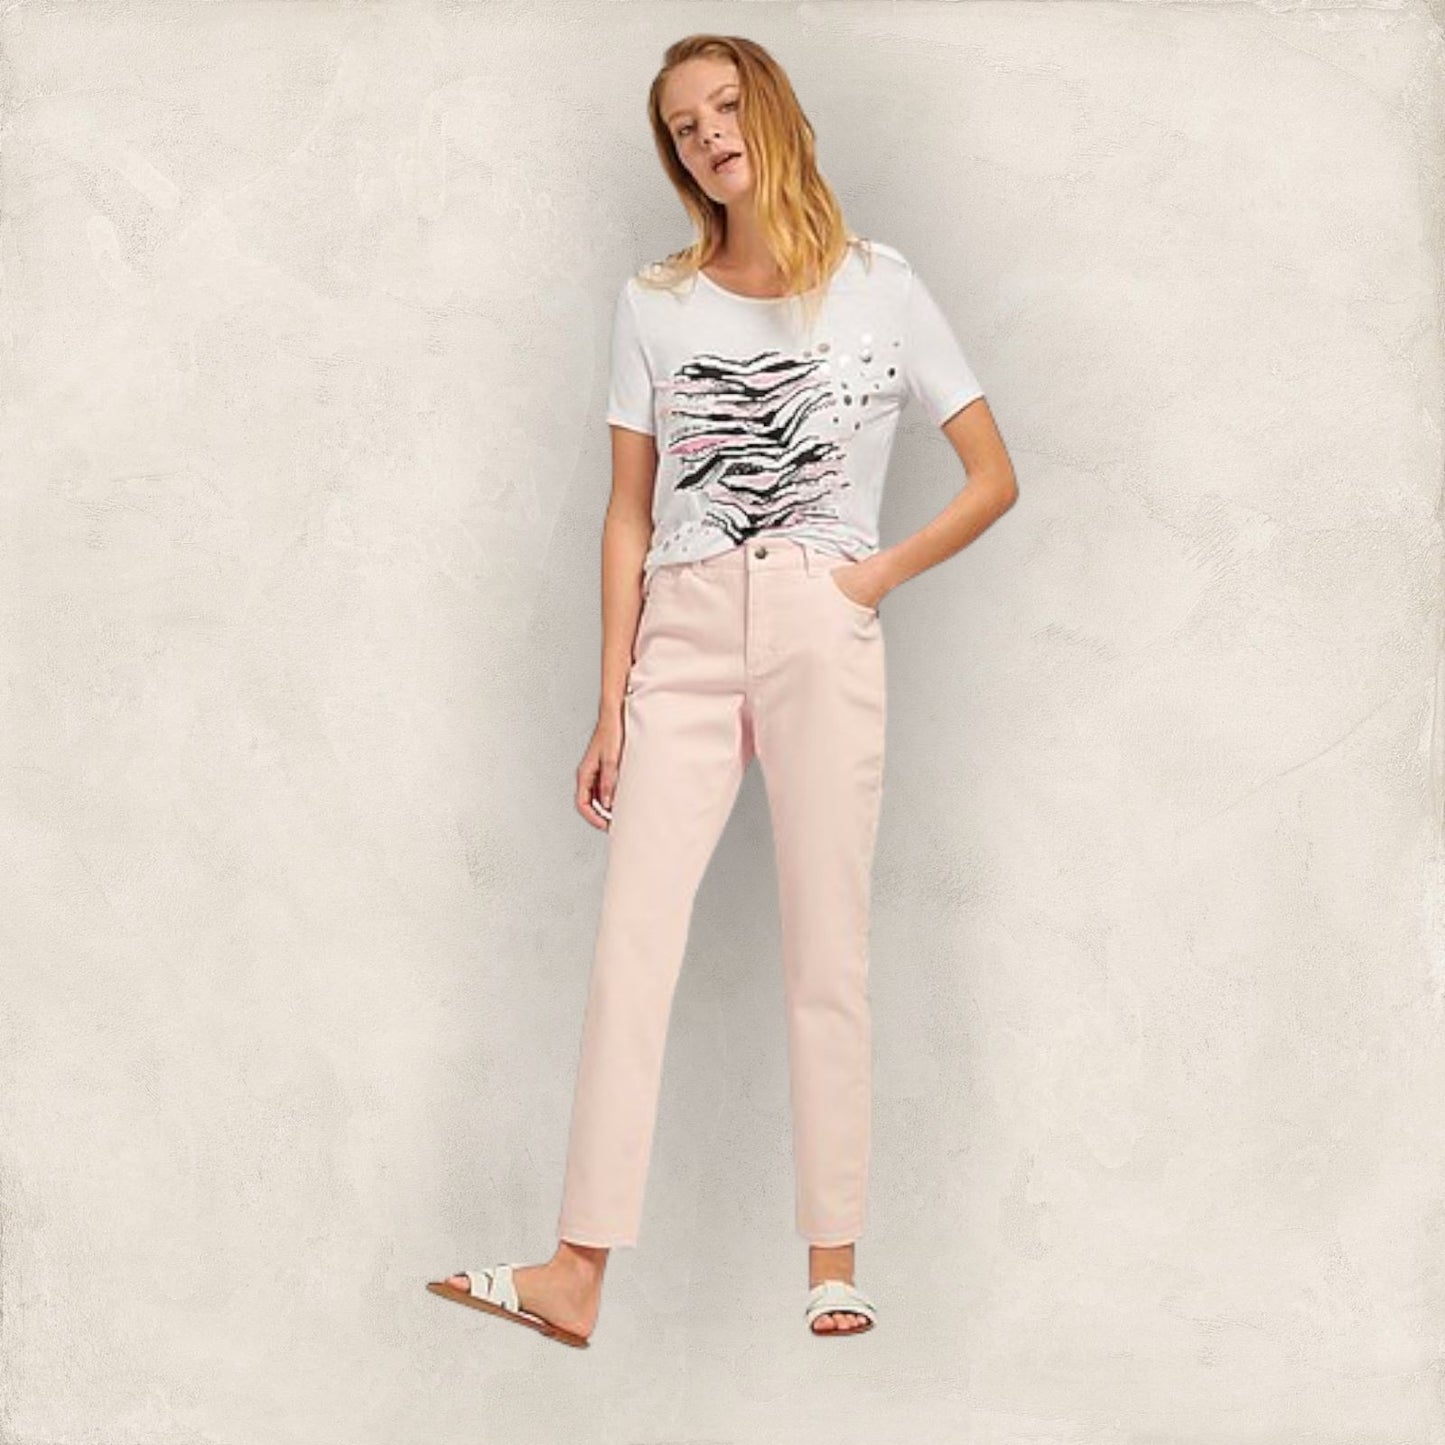 Gerard Darel Women's Pale Pink Slim Leg Ankle Grazer Stretch Jeans UK 16 US 12 EU 44 Timeless Fashions